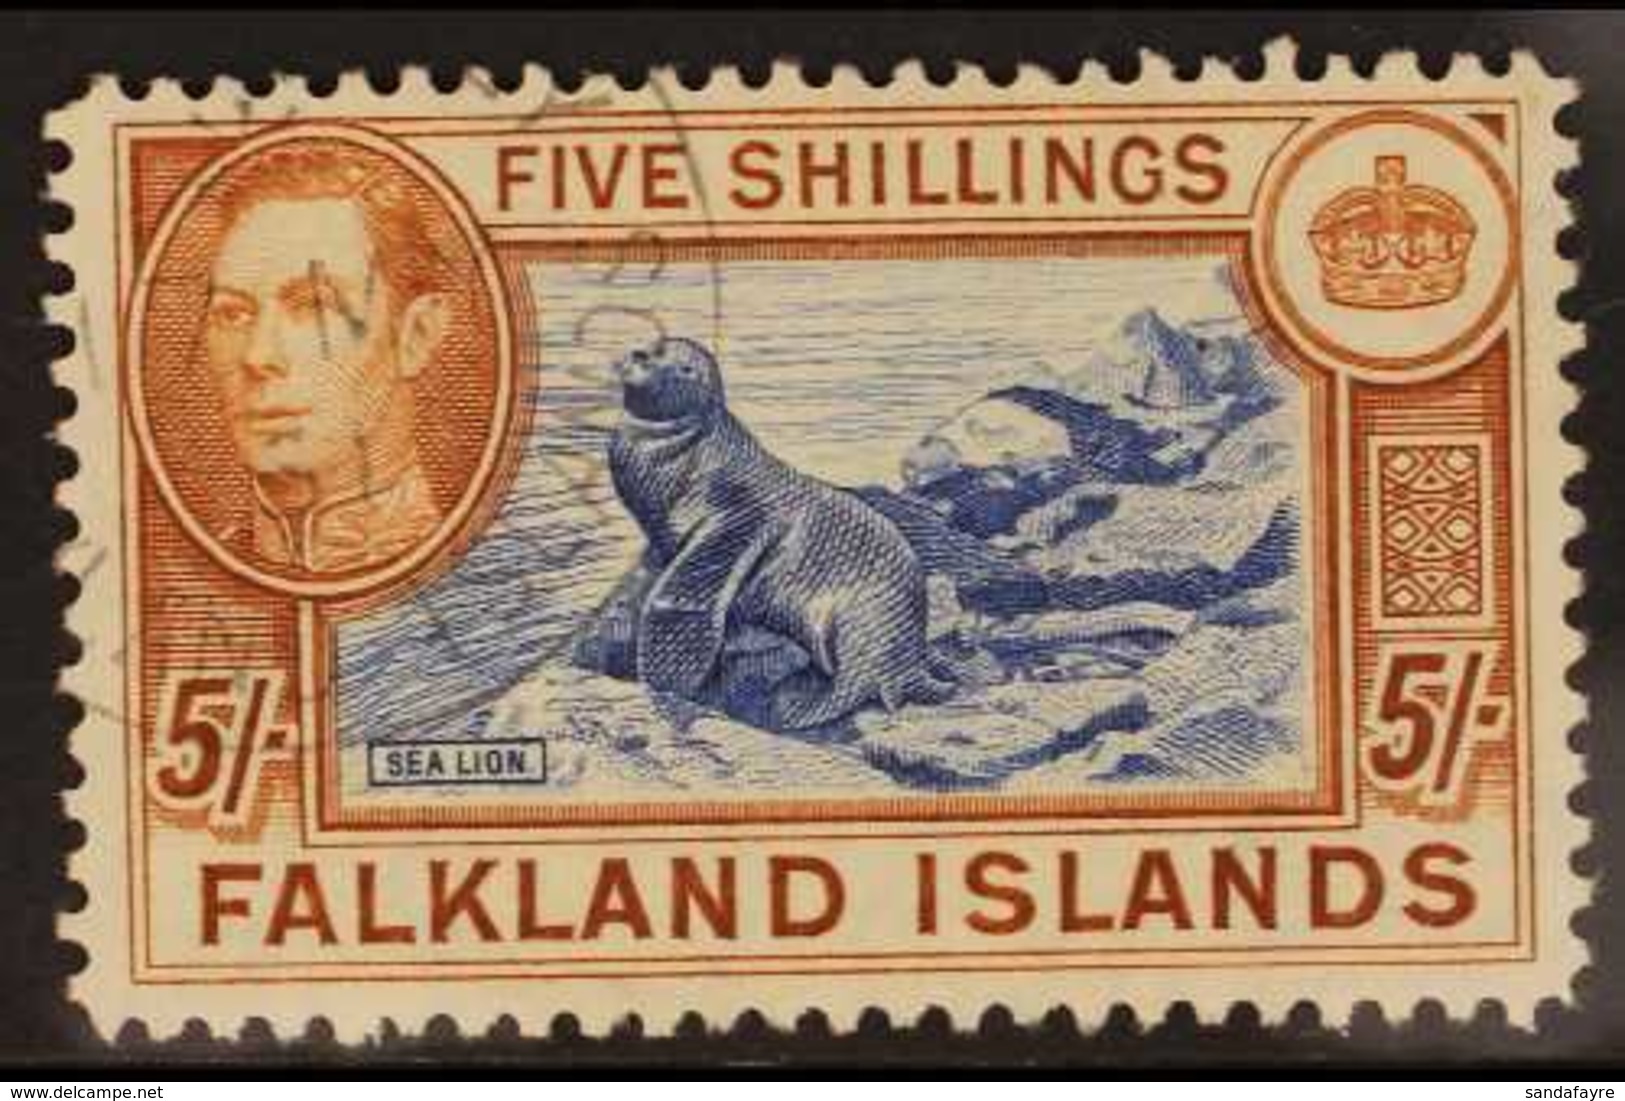 1938-50 5s Blue & Chestnut, SG 161, Very Fine Cds Used For More Images, Please Visit Http://www.sandafayre.com/itemdetai - Falkland